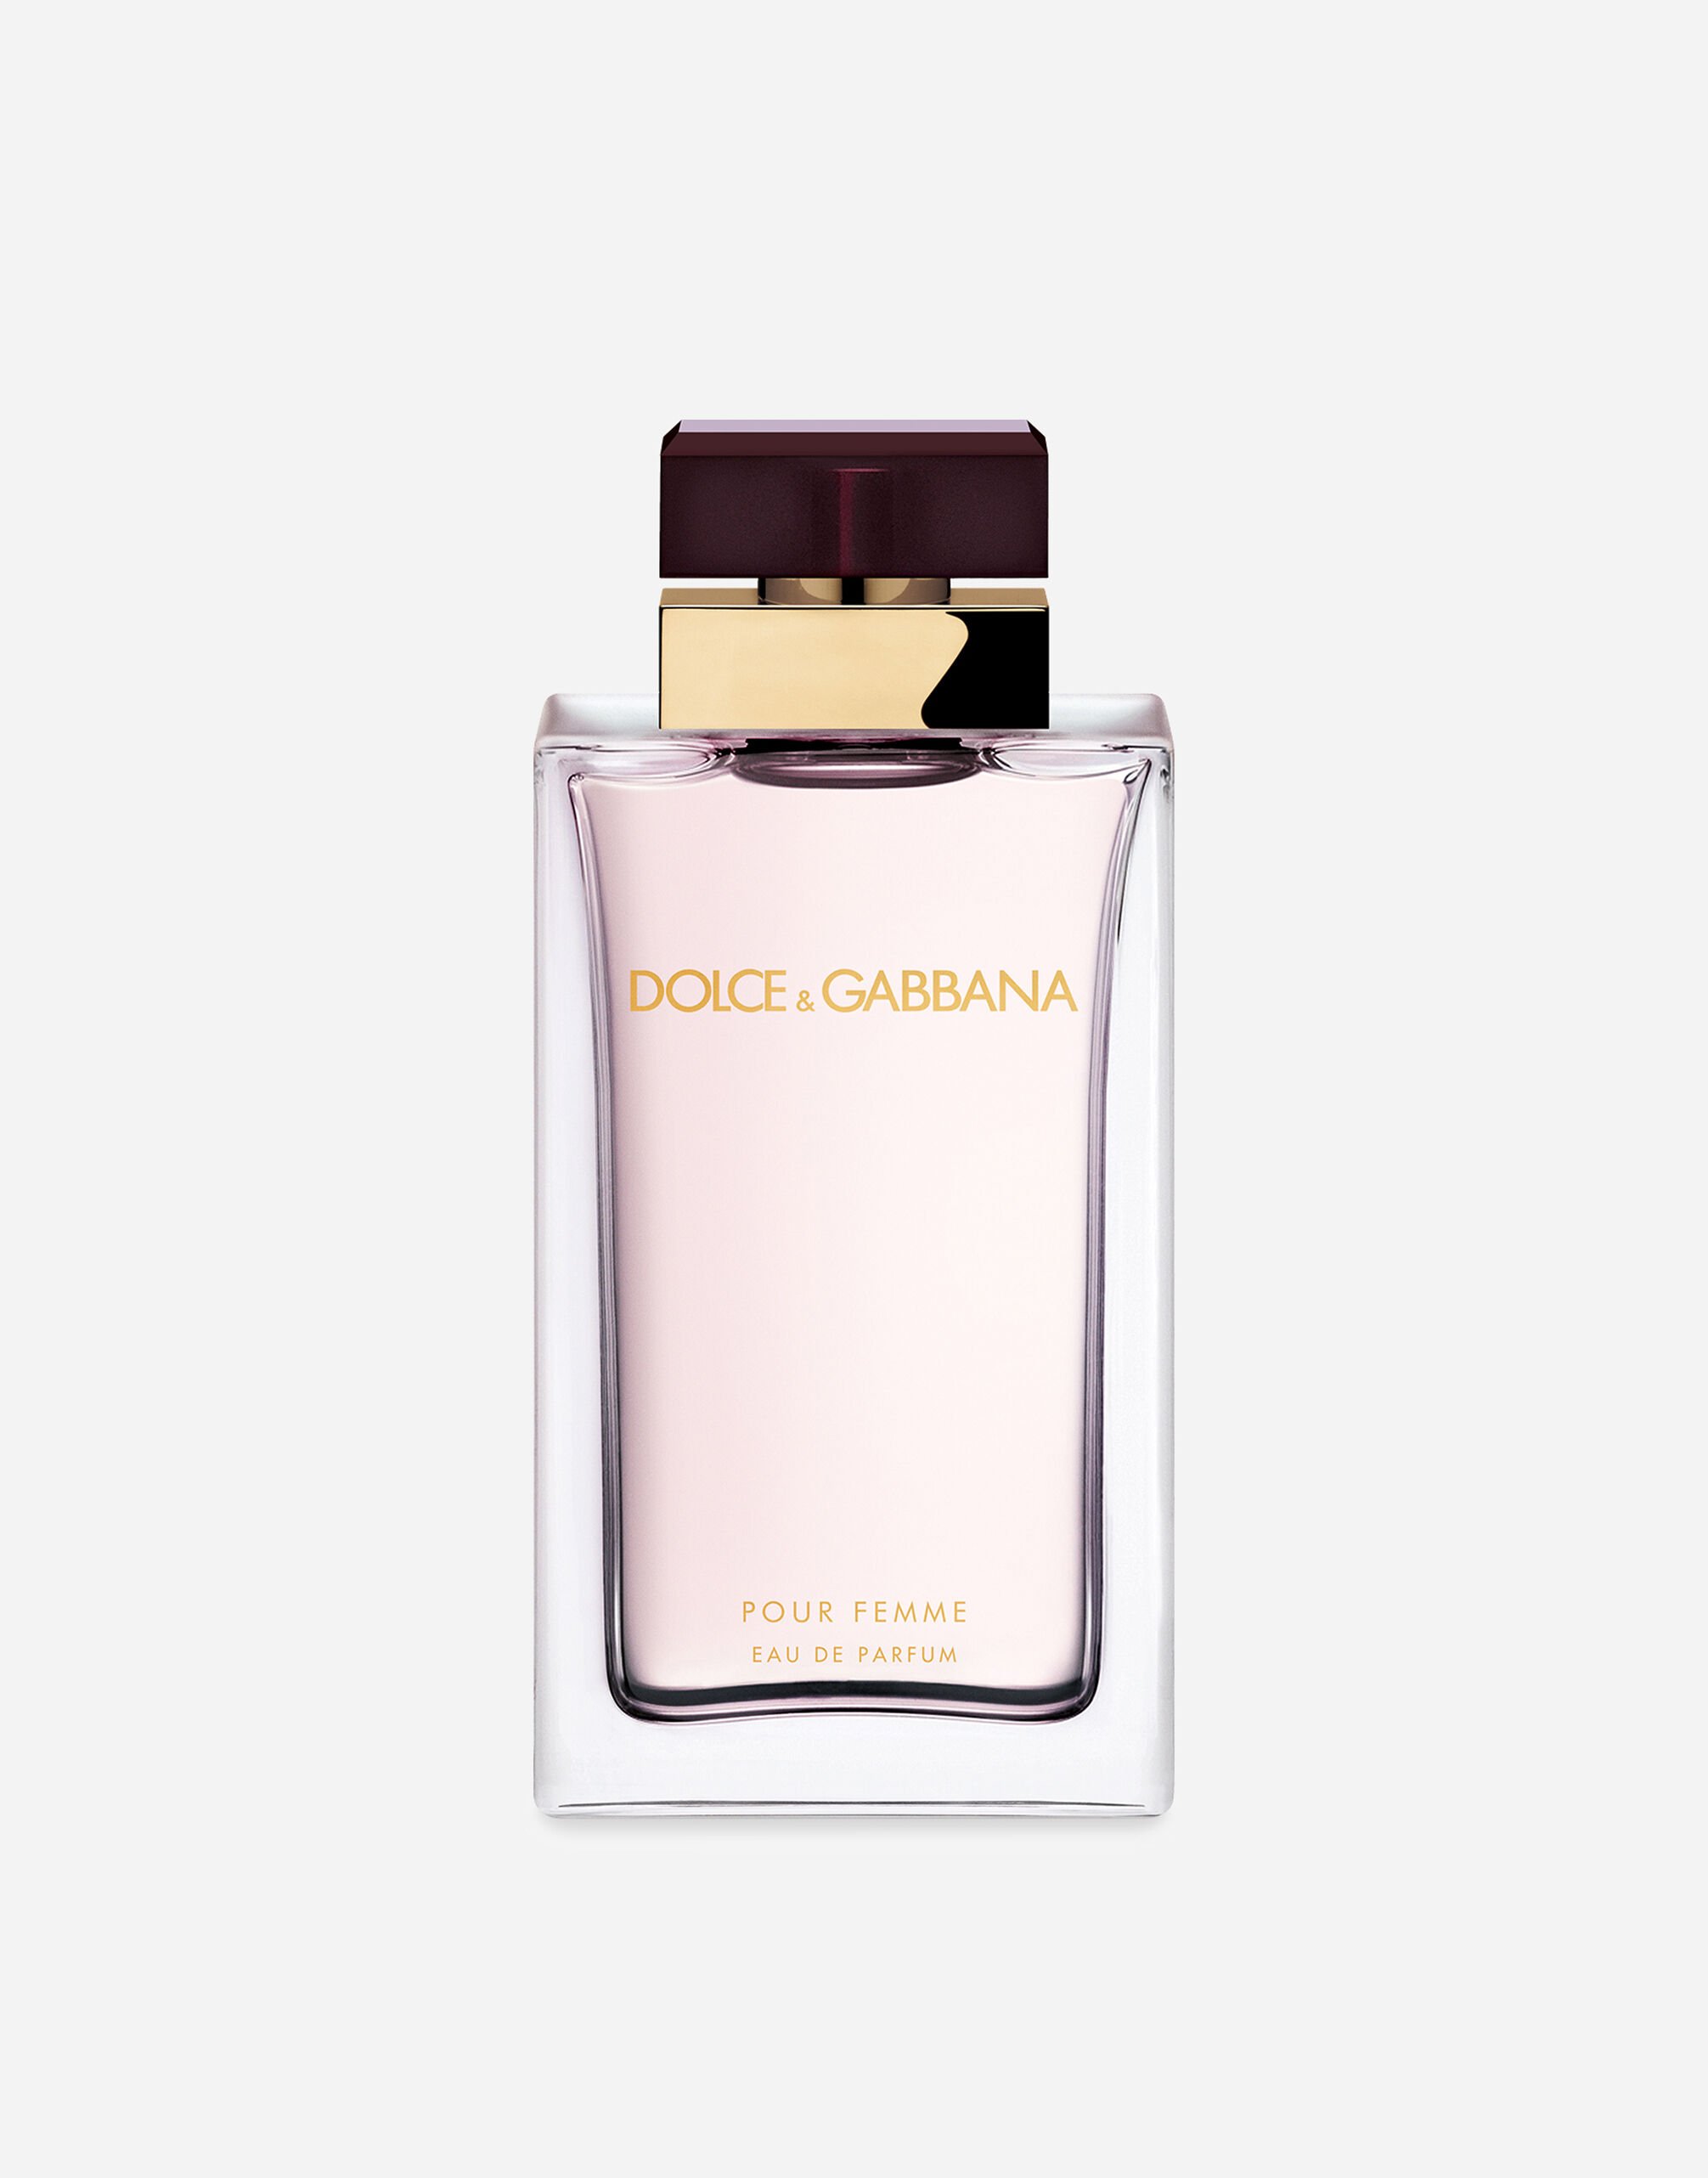 Dolce&Gabbana Pour Femme フレグランス | Dolce&Gabbana Beauty